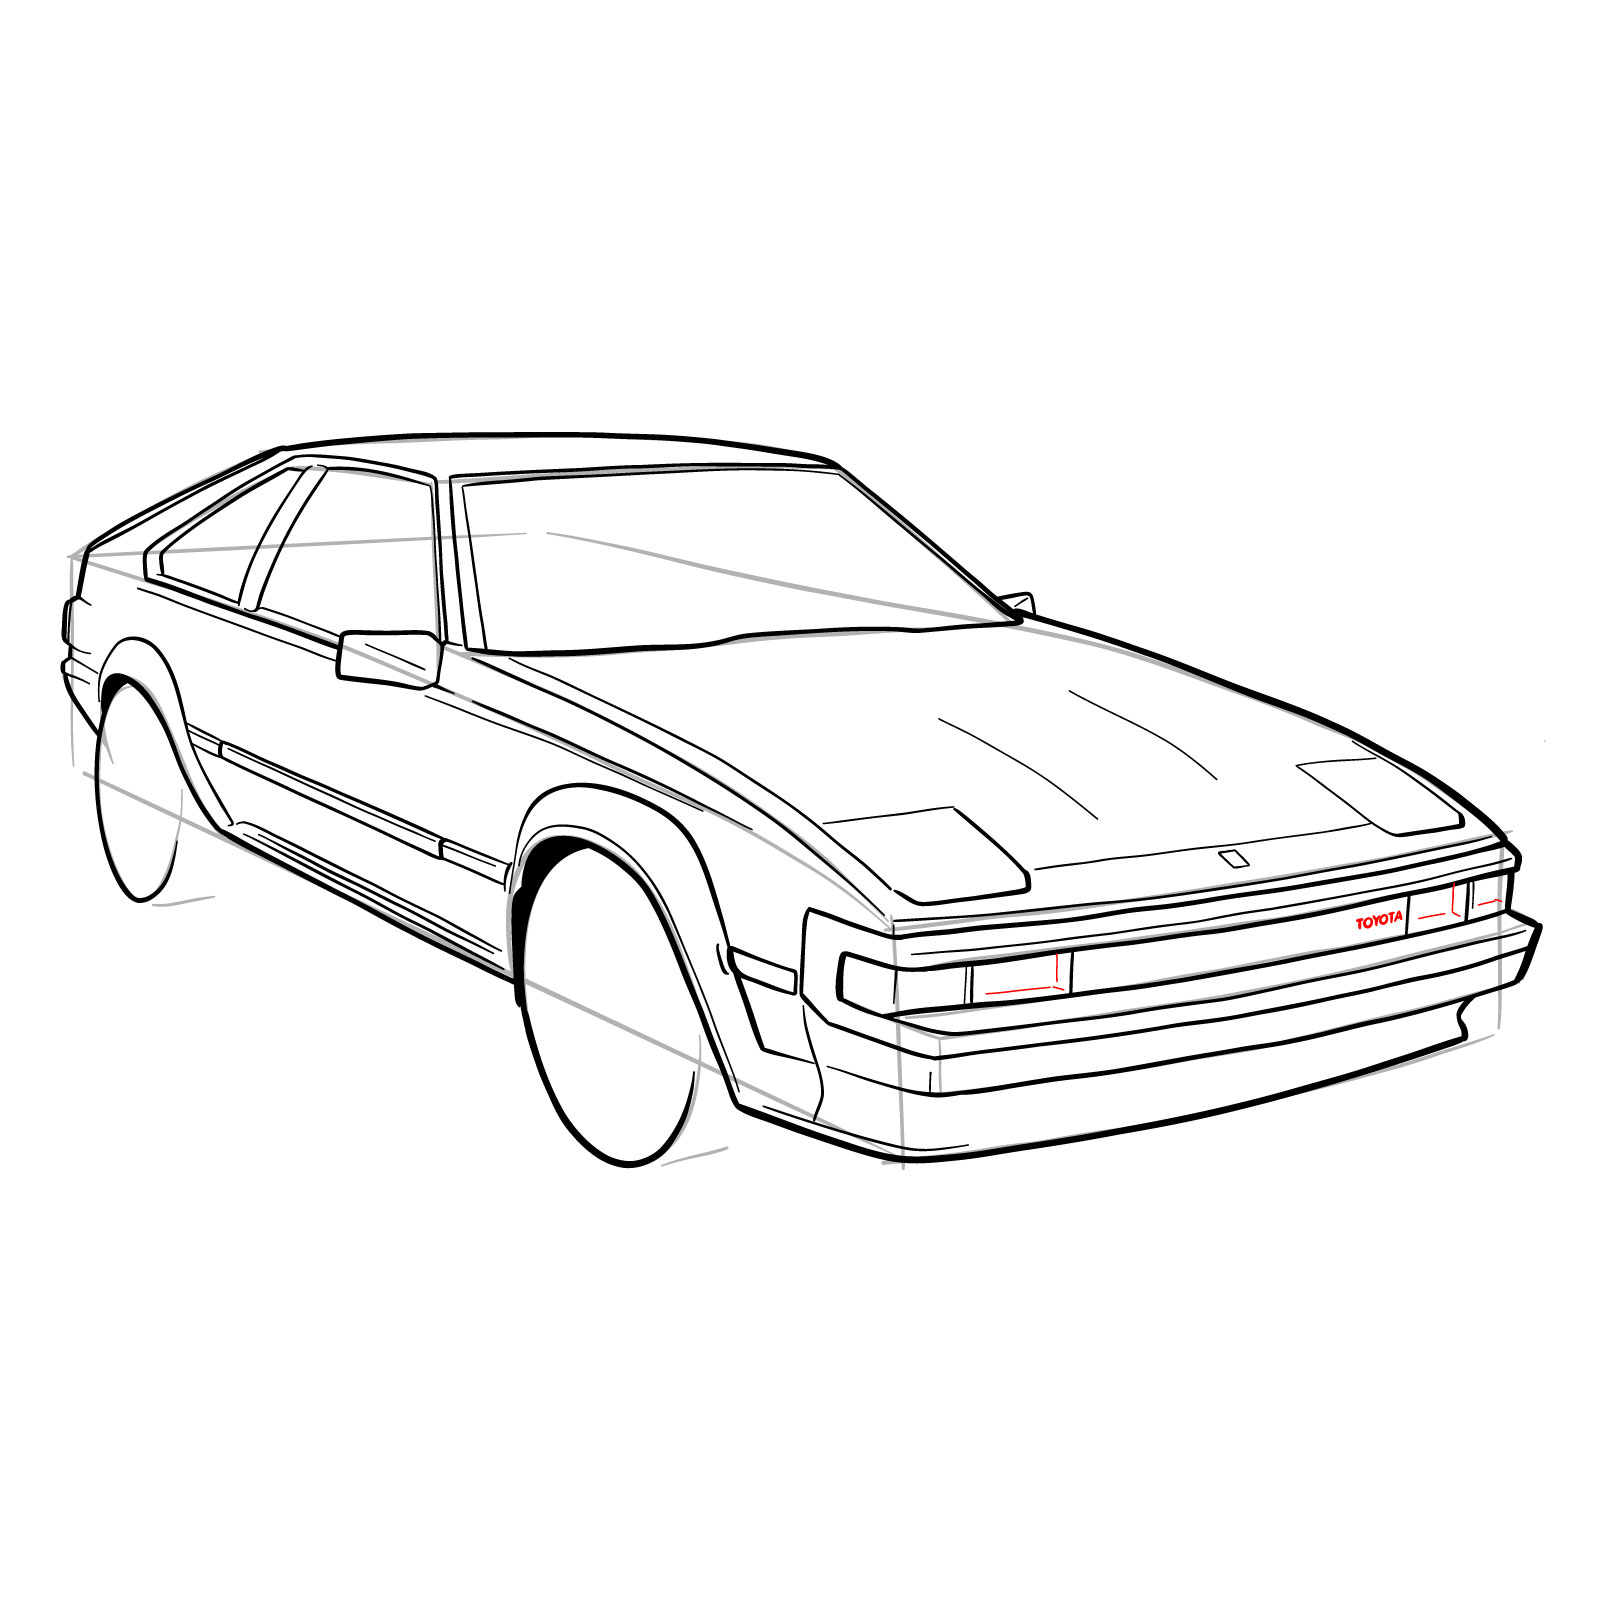 How to draw a 1985 Toyota Celica Supra P Type MK 2 - step 28